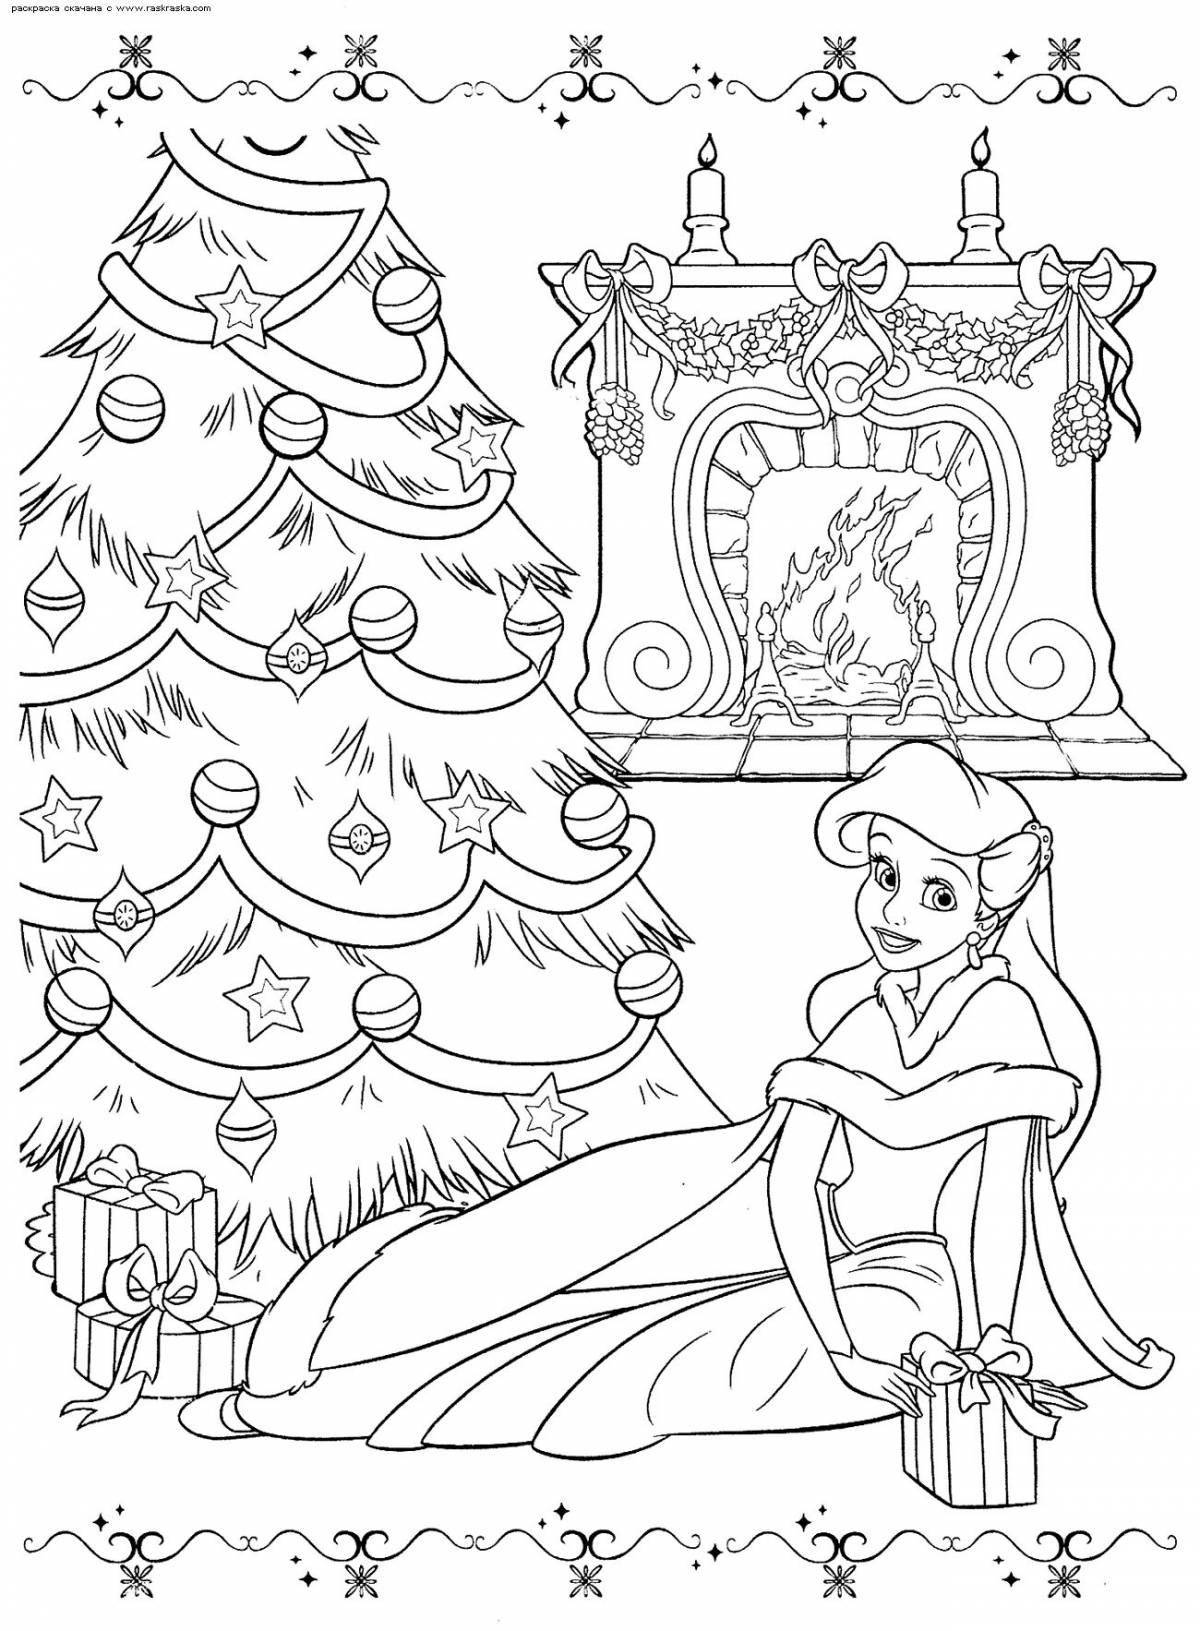 Disney Christmas coloring book